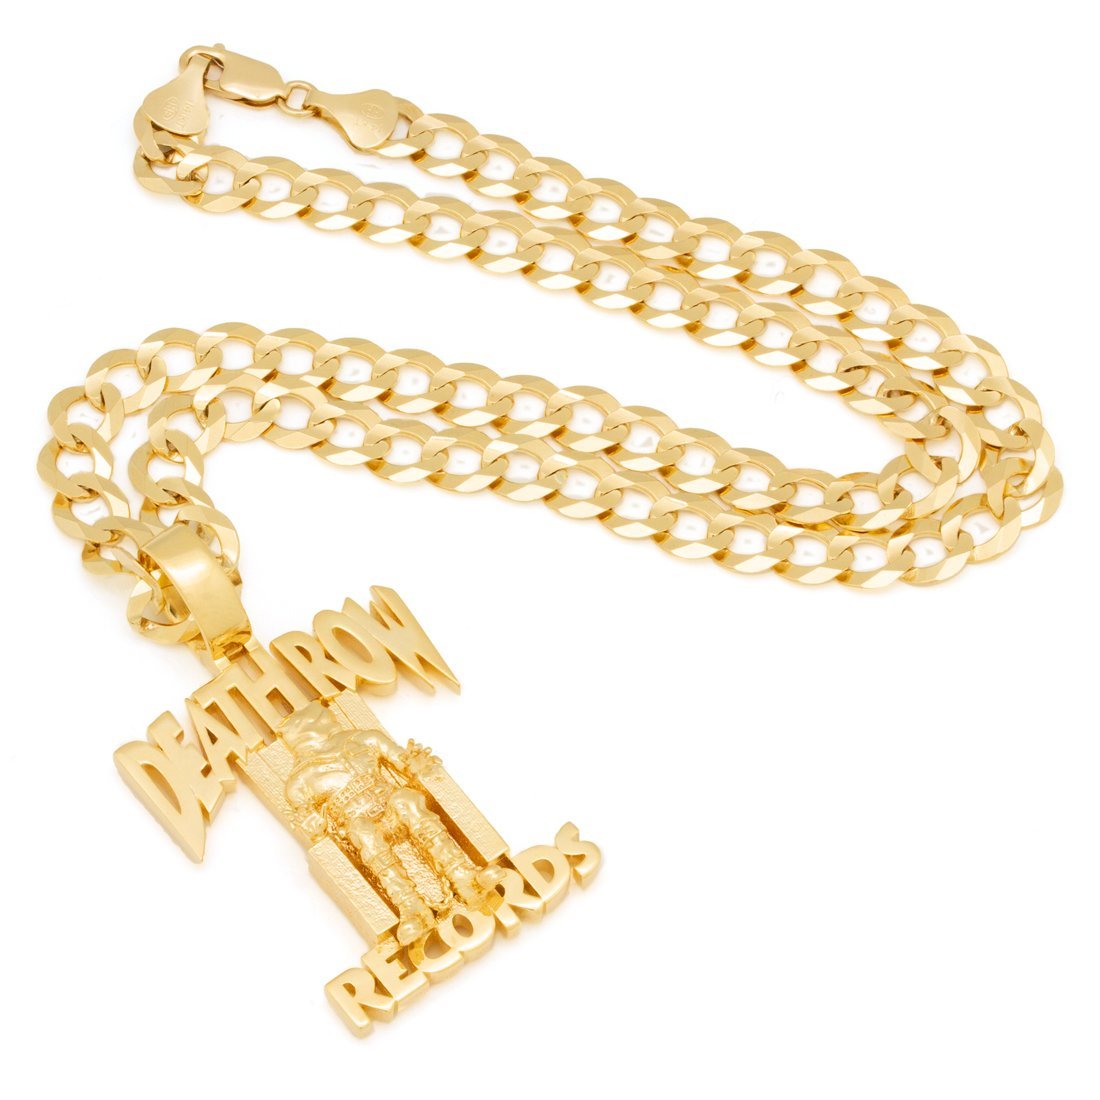 Golden Letter Trust no One Pendant Chain Necklace